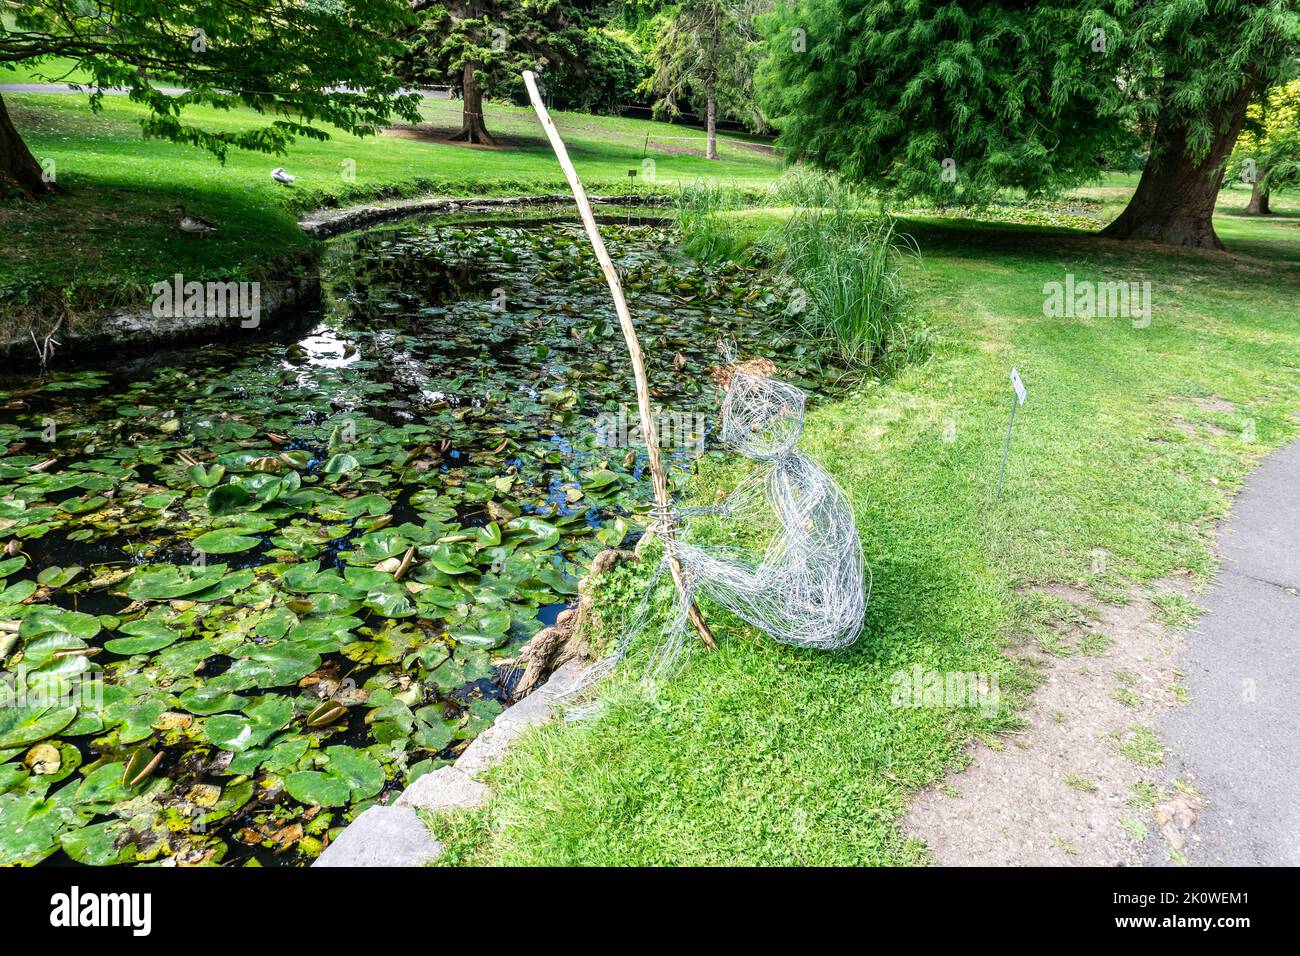 La escultura de alambre de Leo Mandal, The Fisherman, forma parte de la serie Escultura en contexto del Jardín Botánico Nacional de Irlanda. Foto de stock